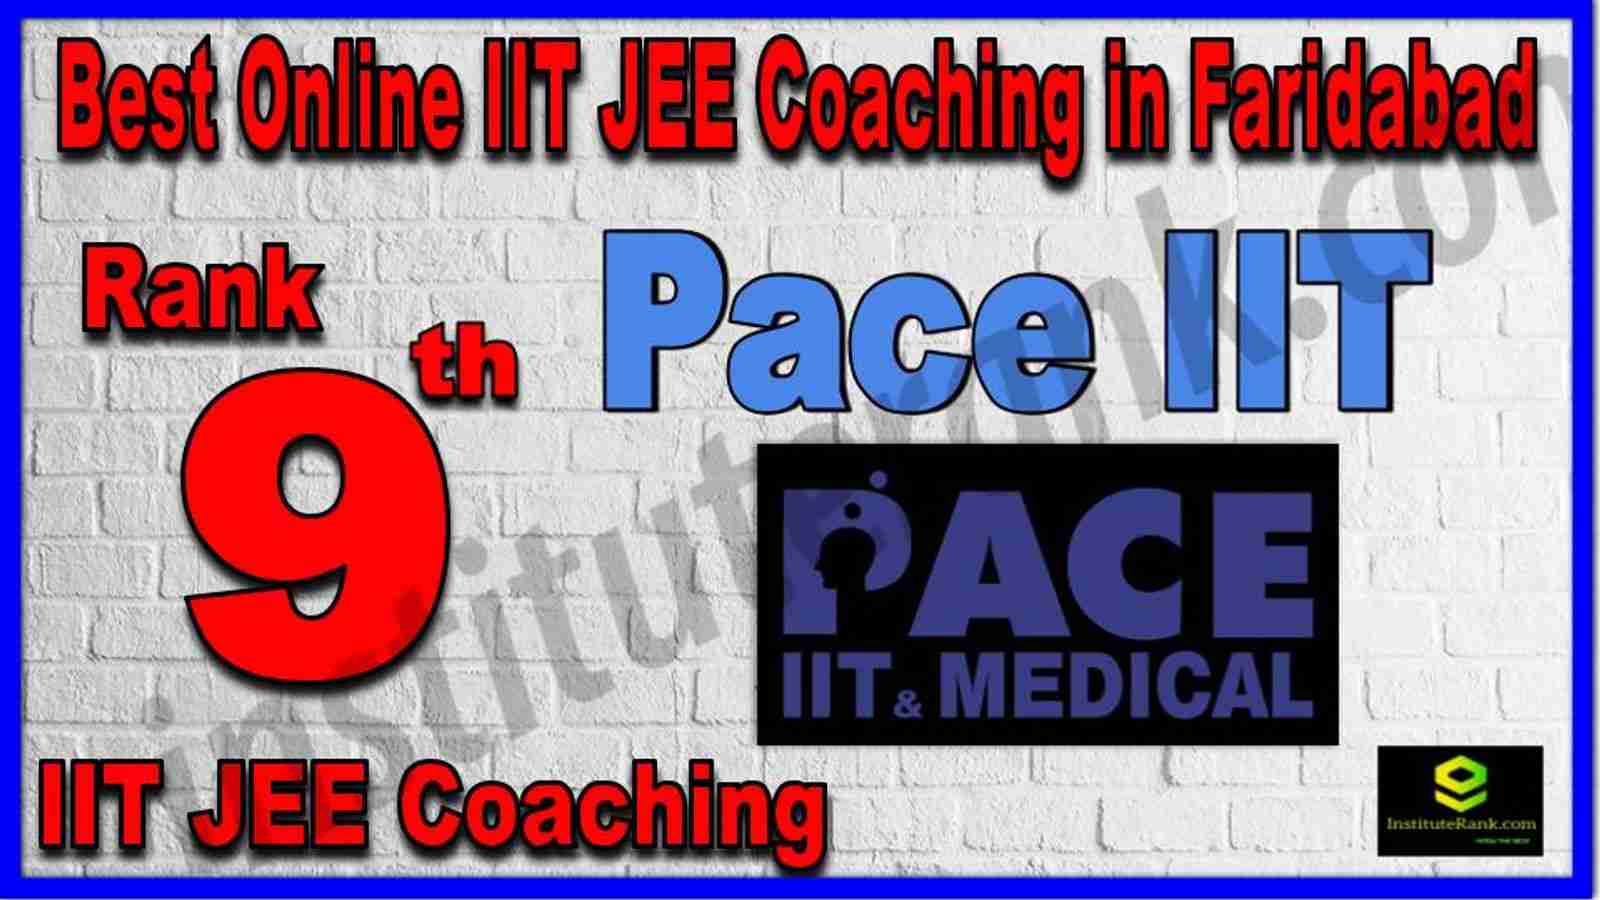 Rank 9th Best Online IIT JEE Coaching in Faridabad